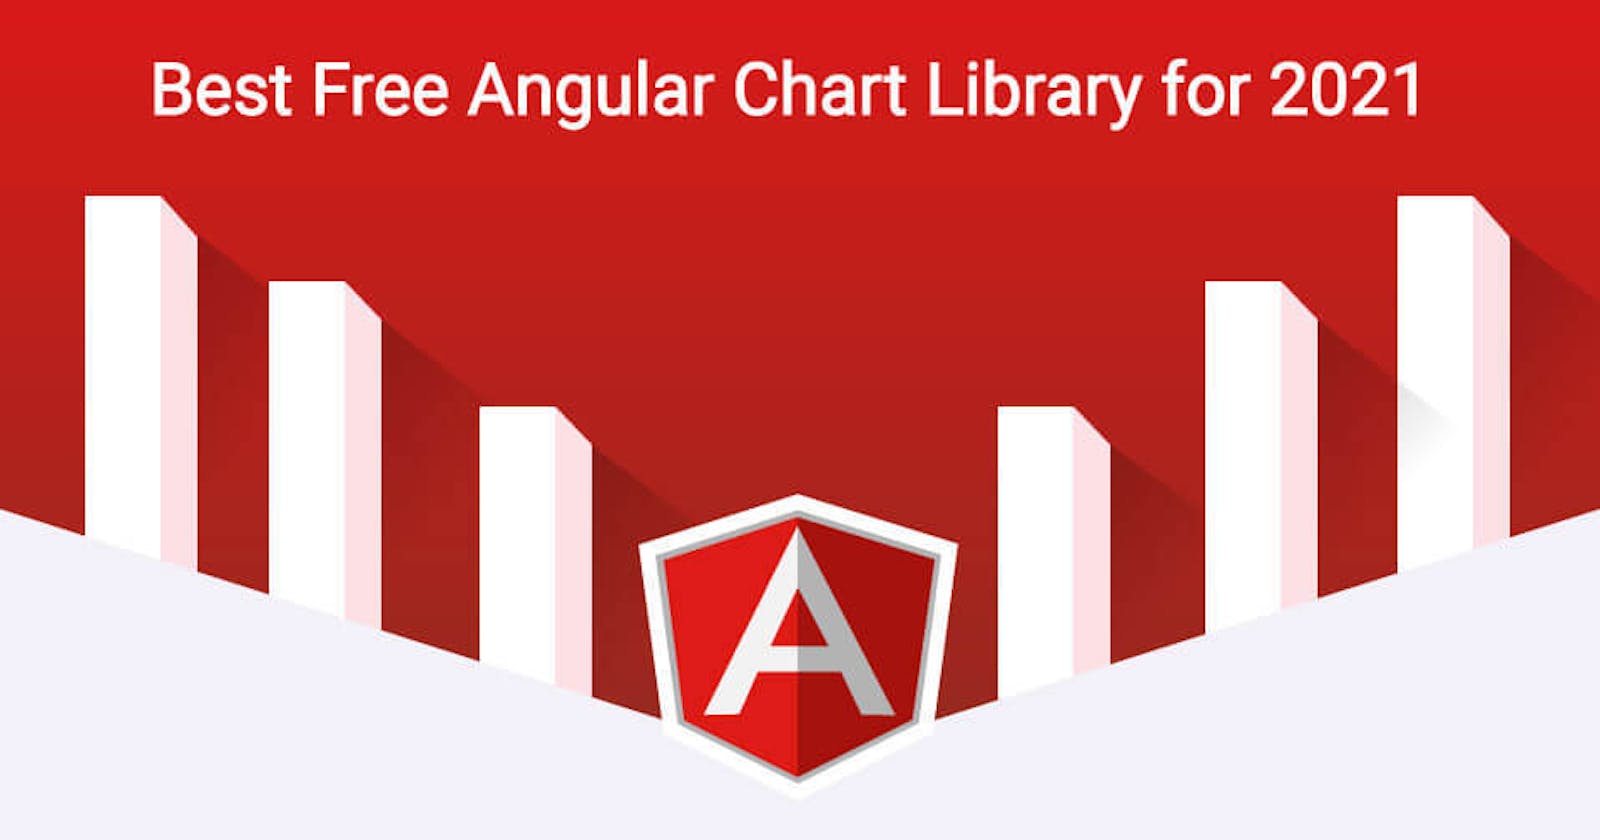 Best free angular chart library 2021